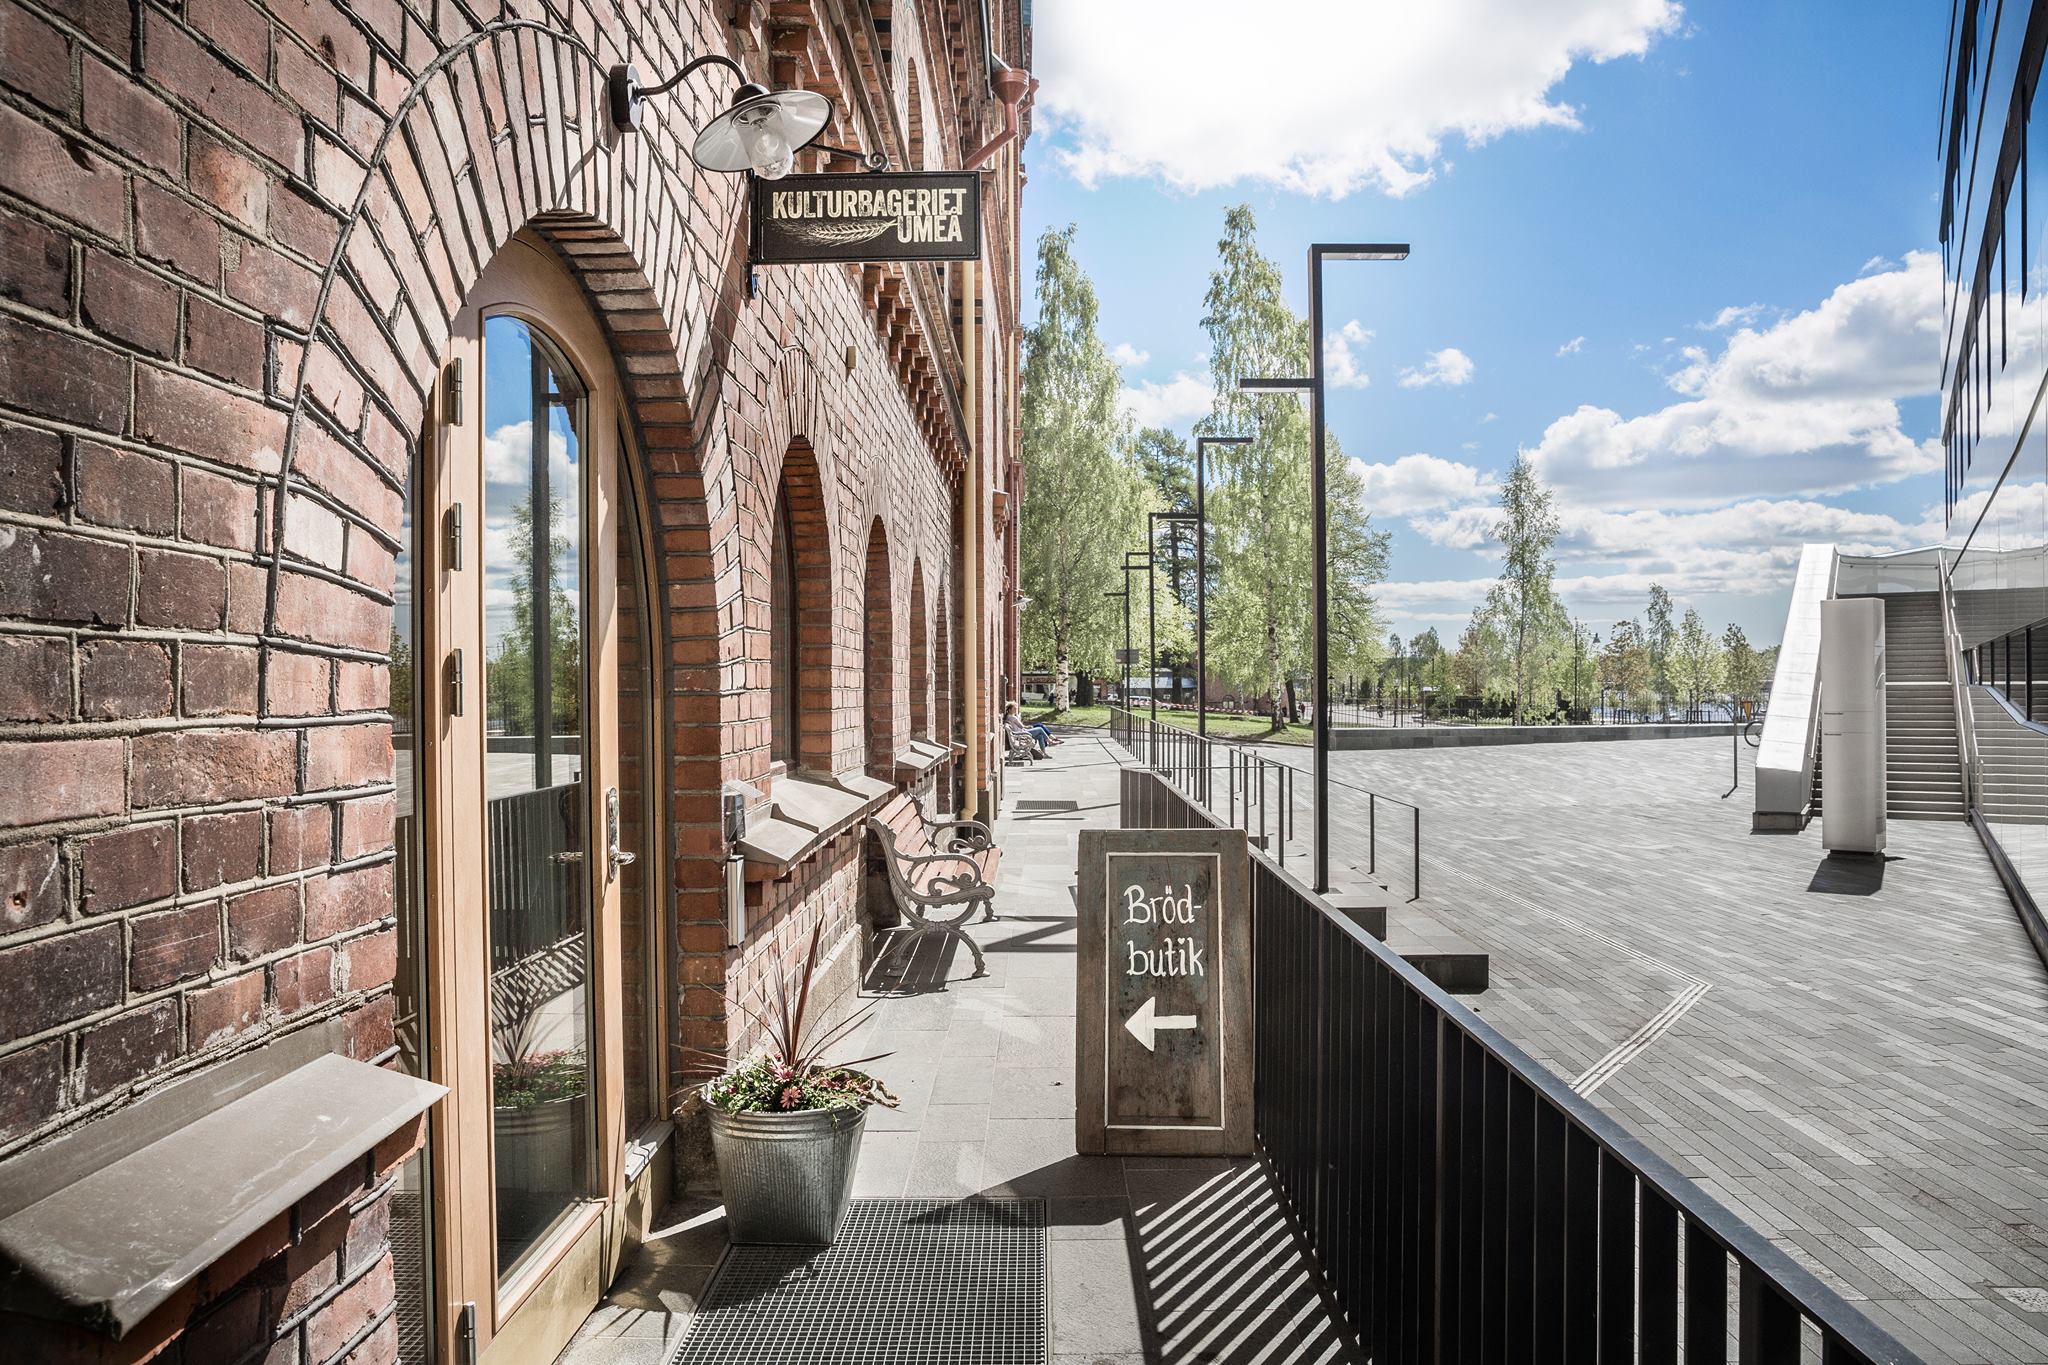 Entrén till kulturbageriet i Umeå